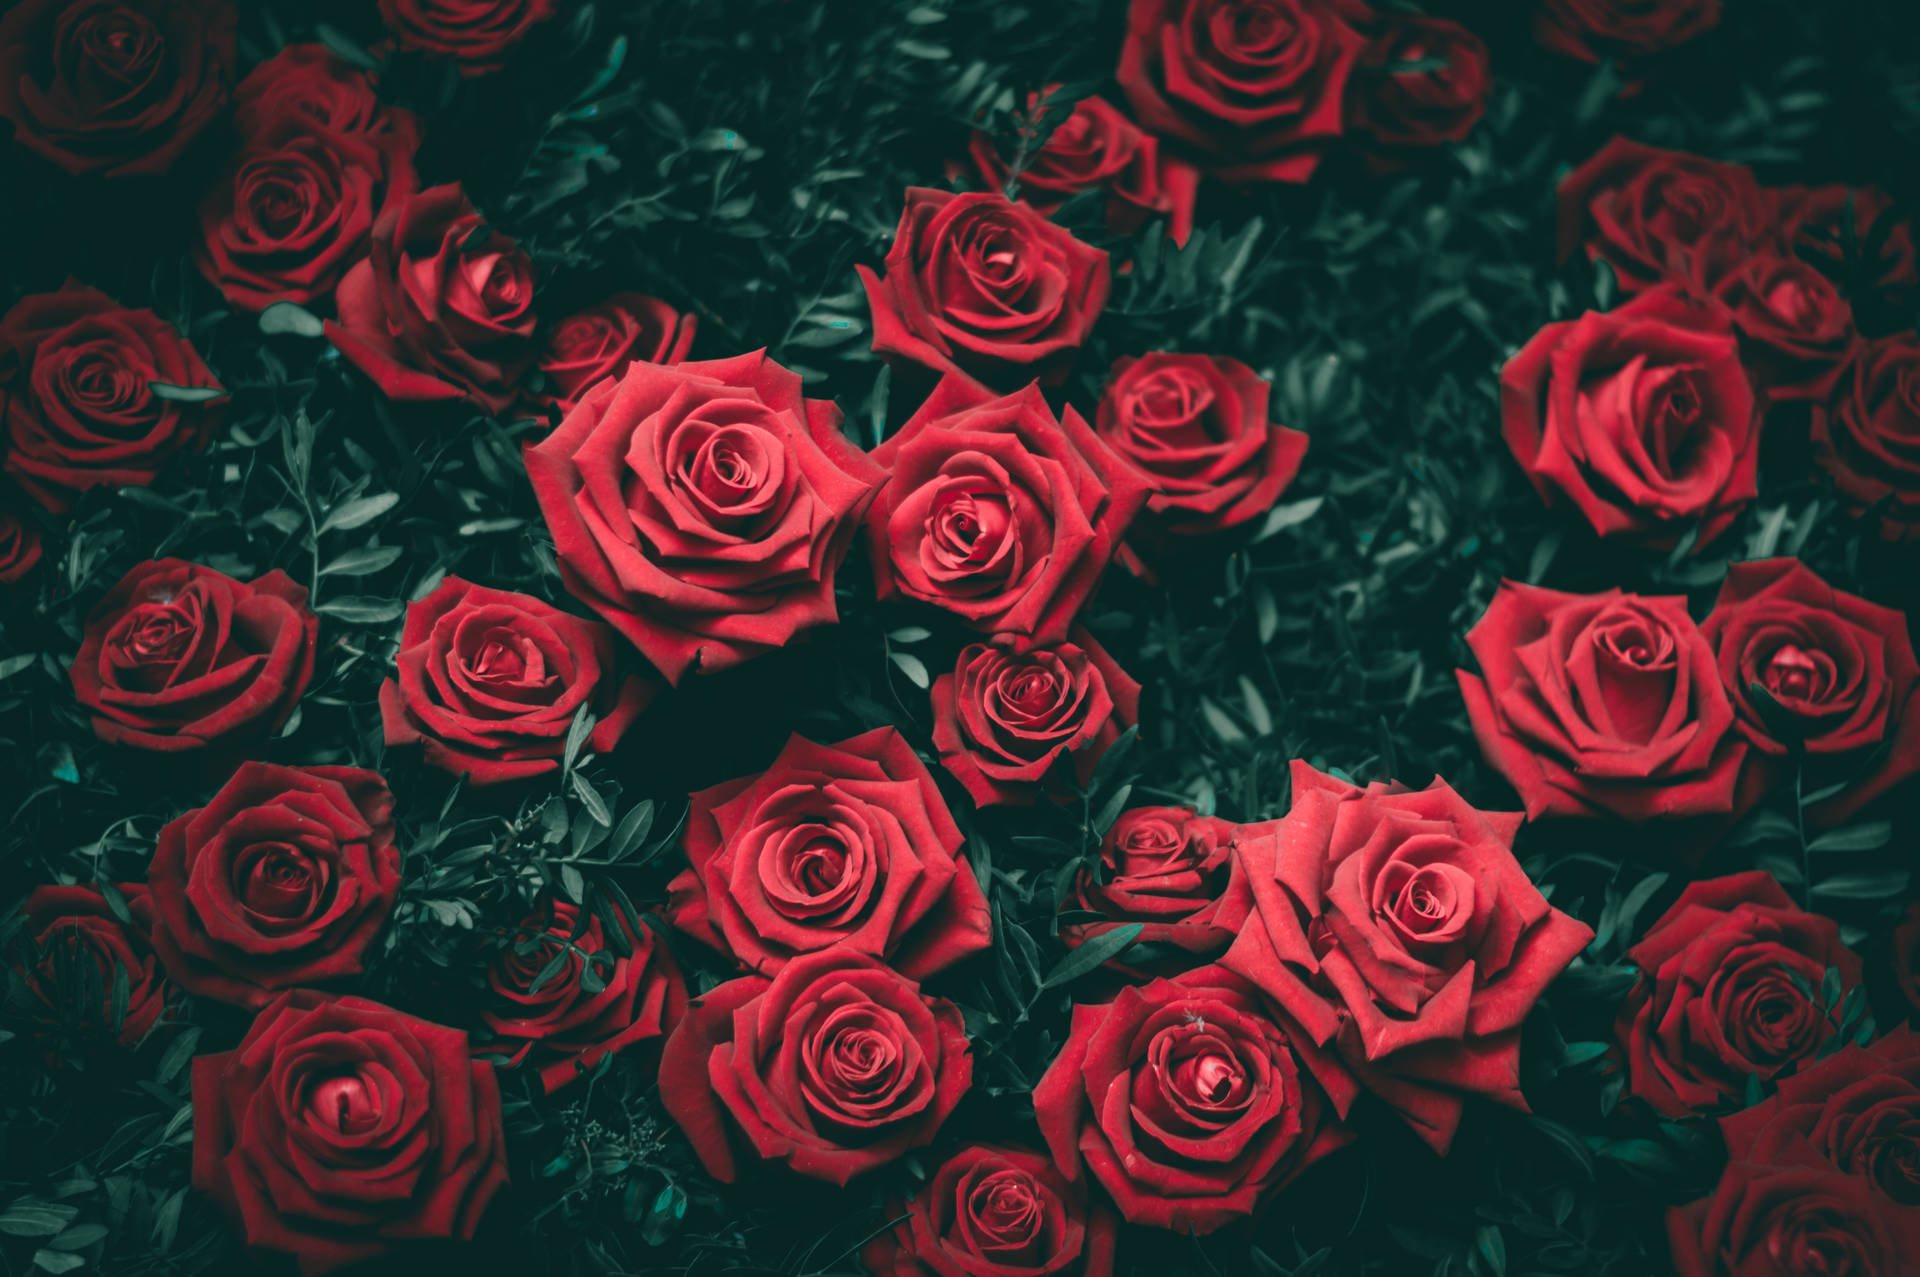 Varied Color Roses Bring Life to a Desktop Wallpaper